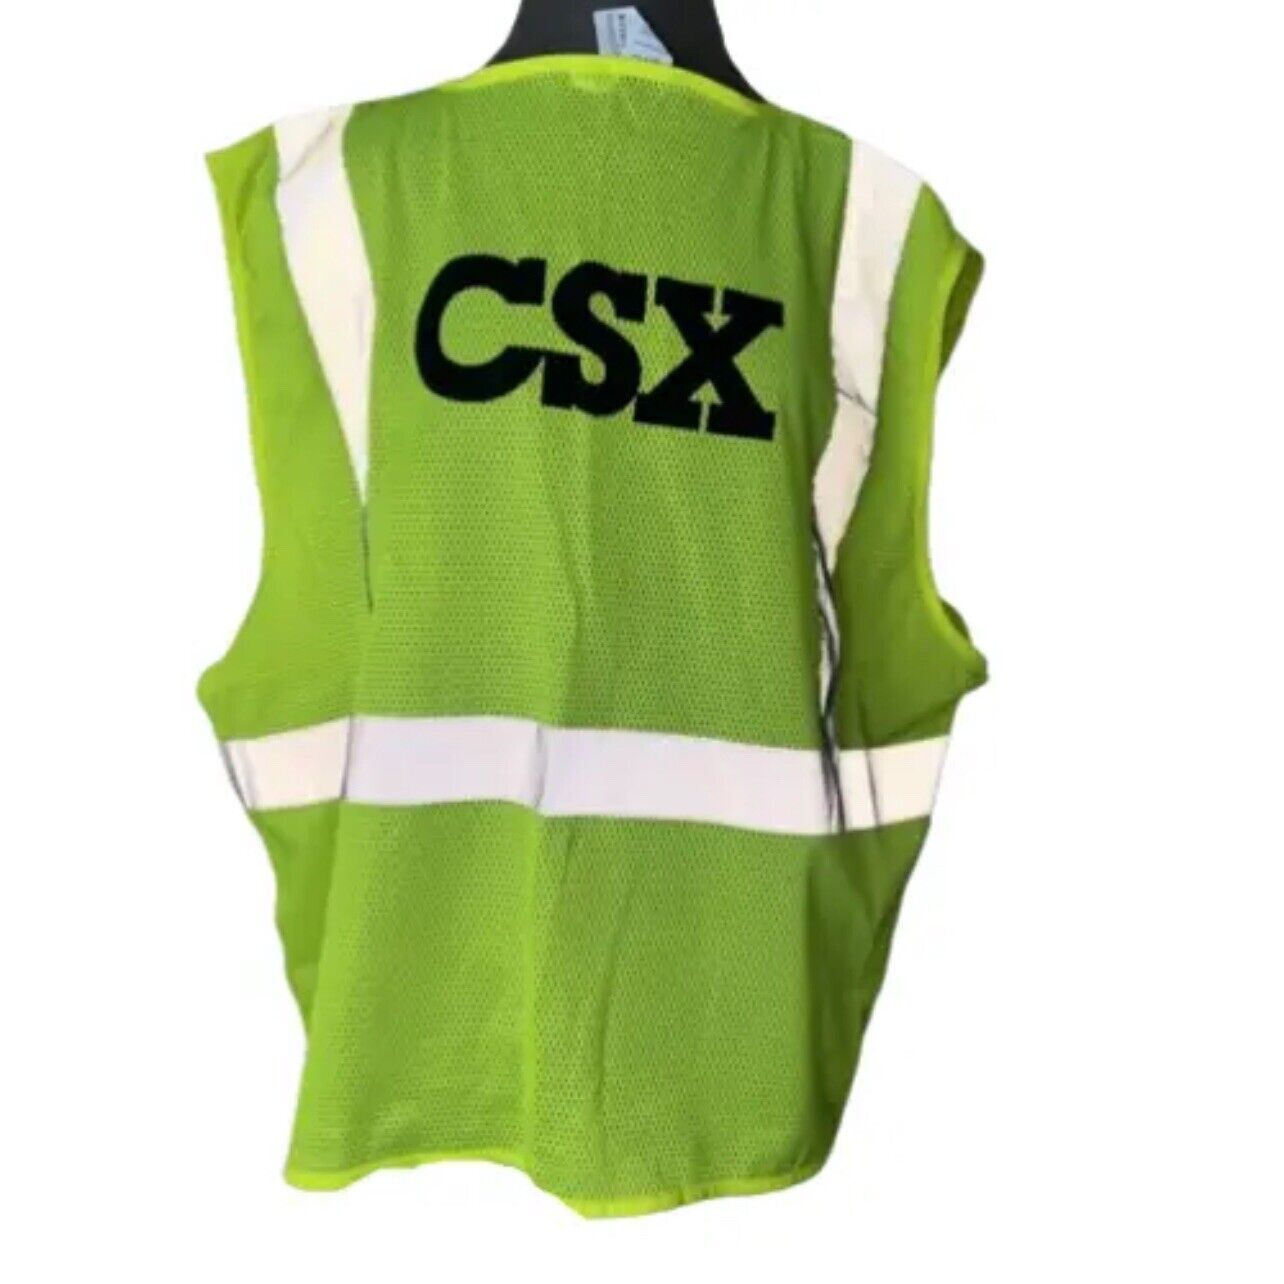 CSX Neon Hi-Res Safety  Neon Yellow Rail Train Tee Vest Railroad Train Size XS-S